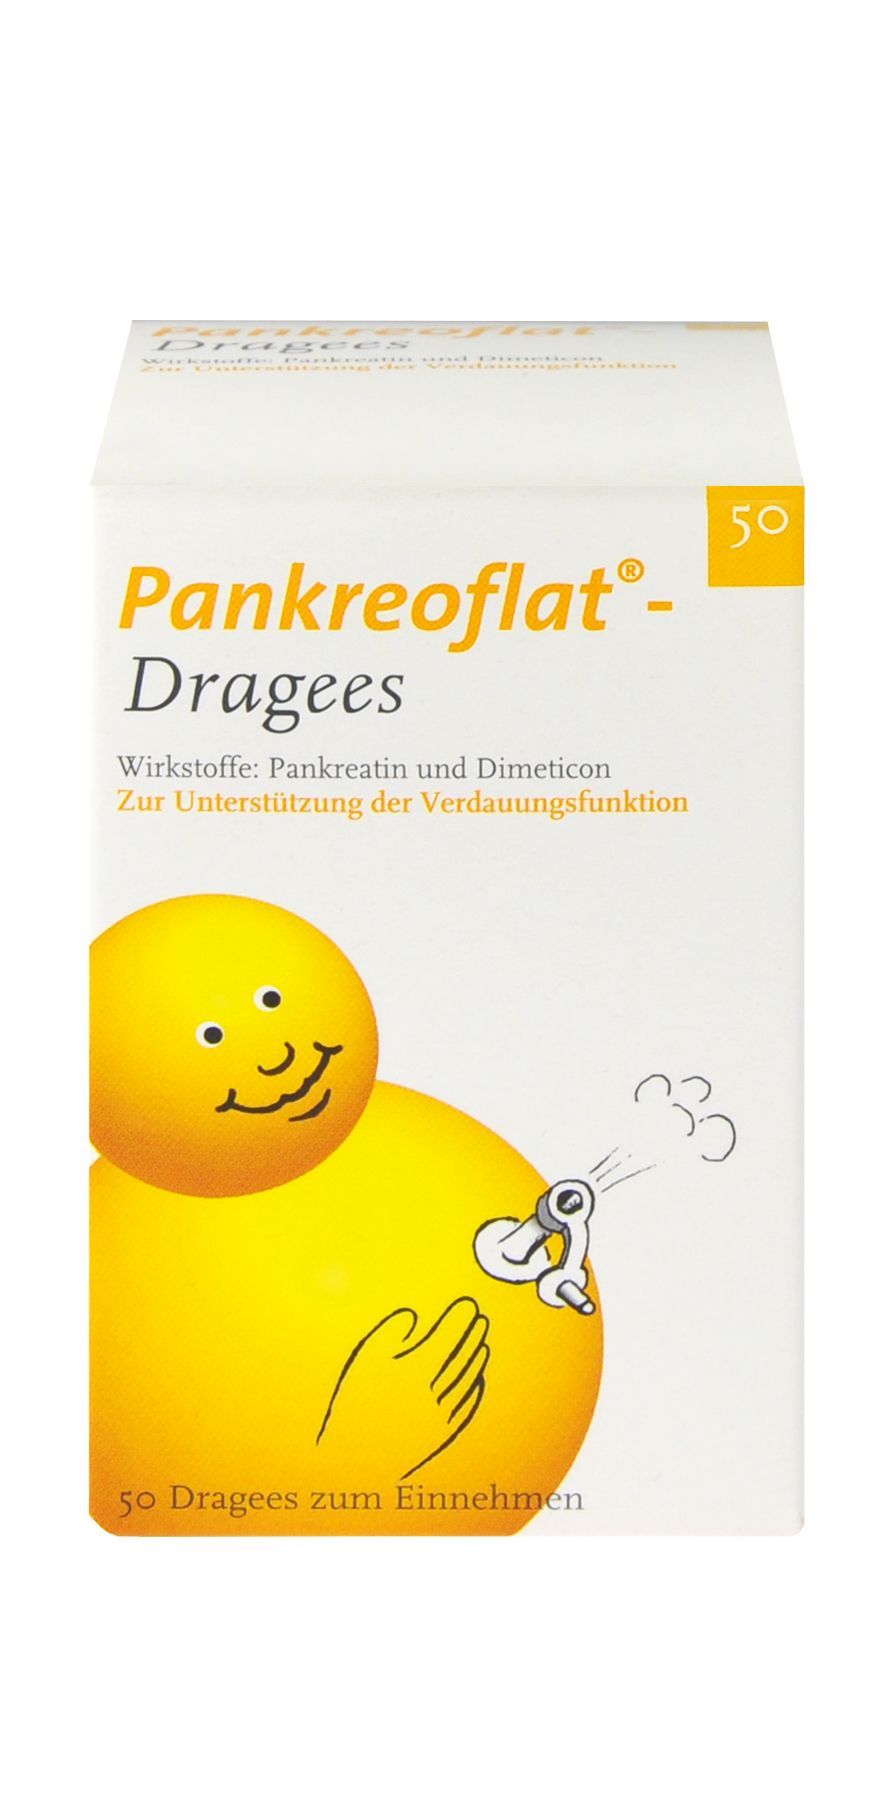 Pankreoflat - Dragees